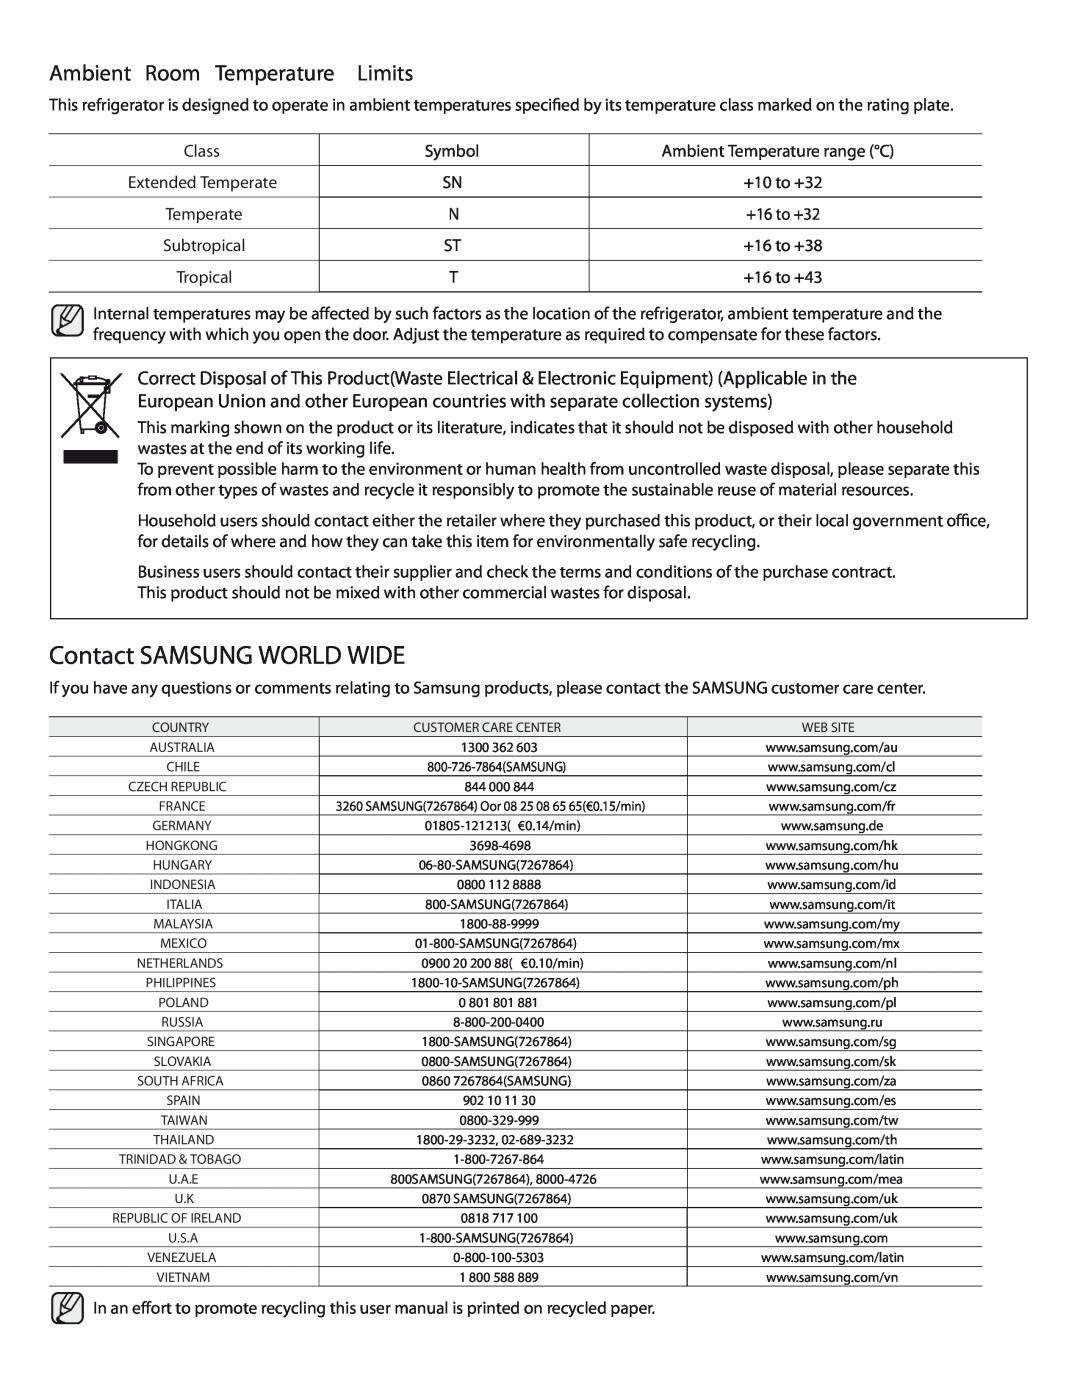 Samsung DA68-01890M user manual Contact SAMSUNG WORLD WIDE, Ambient Room Temperature Limits, Class, Symbol 